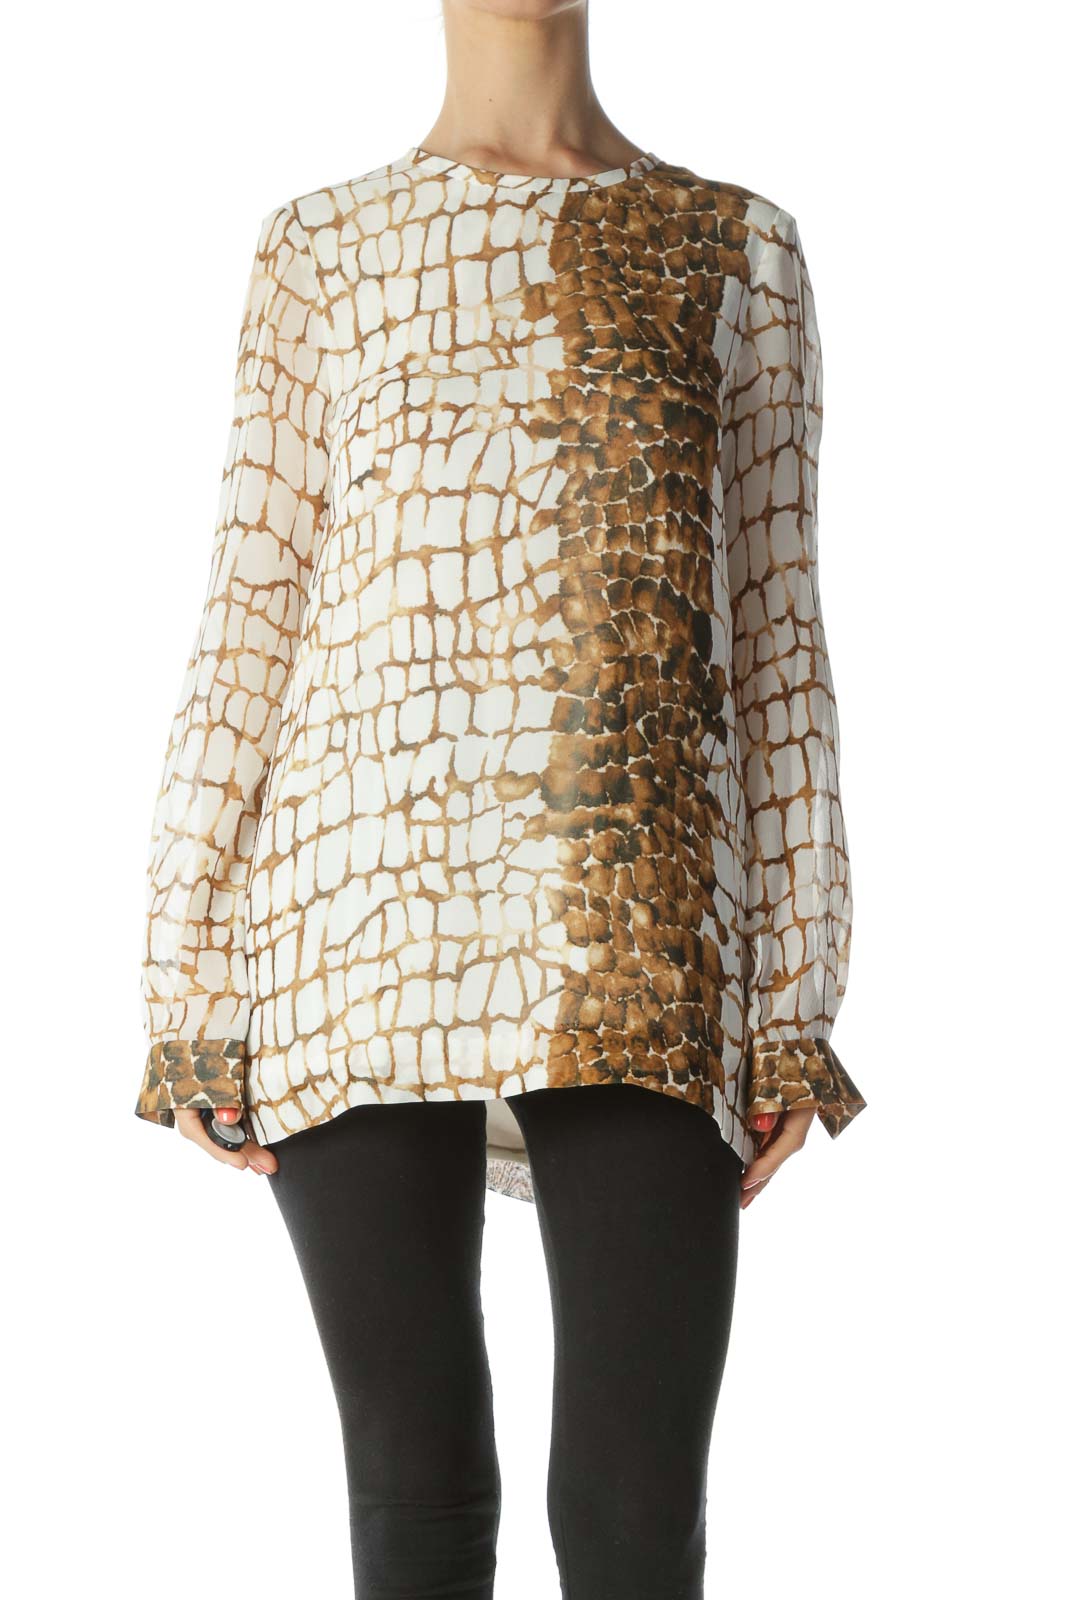 White & Brown Reptilian-Print 100% Silk Long-Sleeve Designer Blouse Front